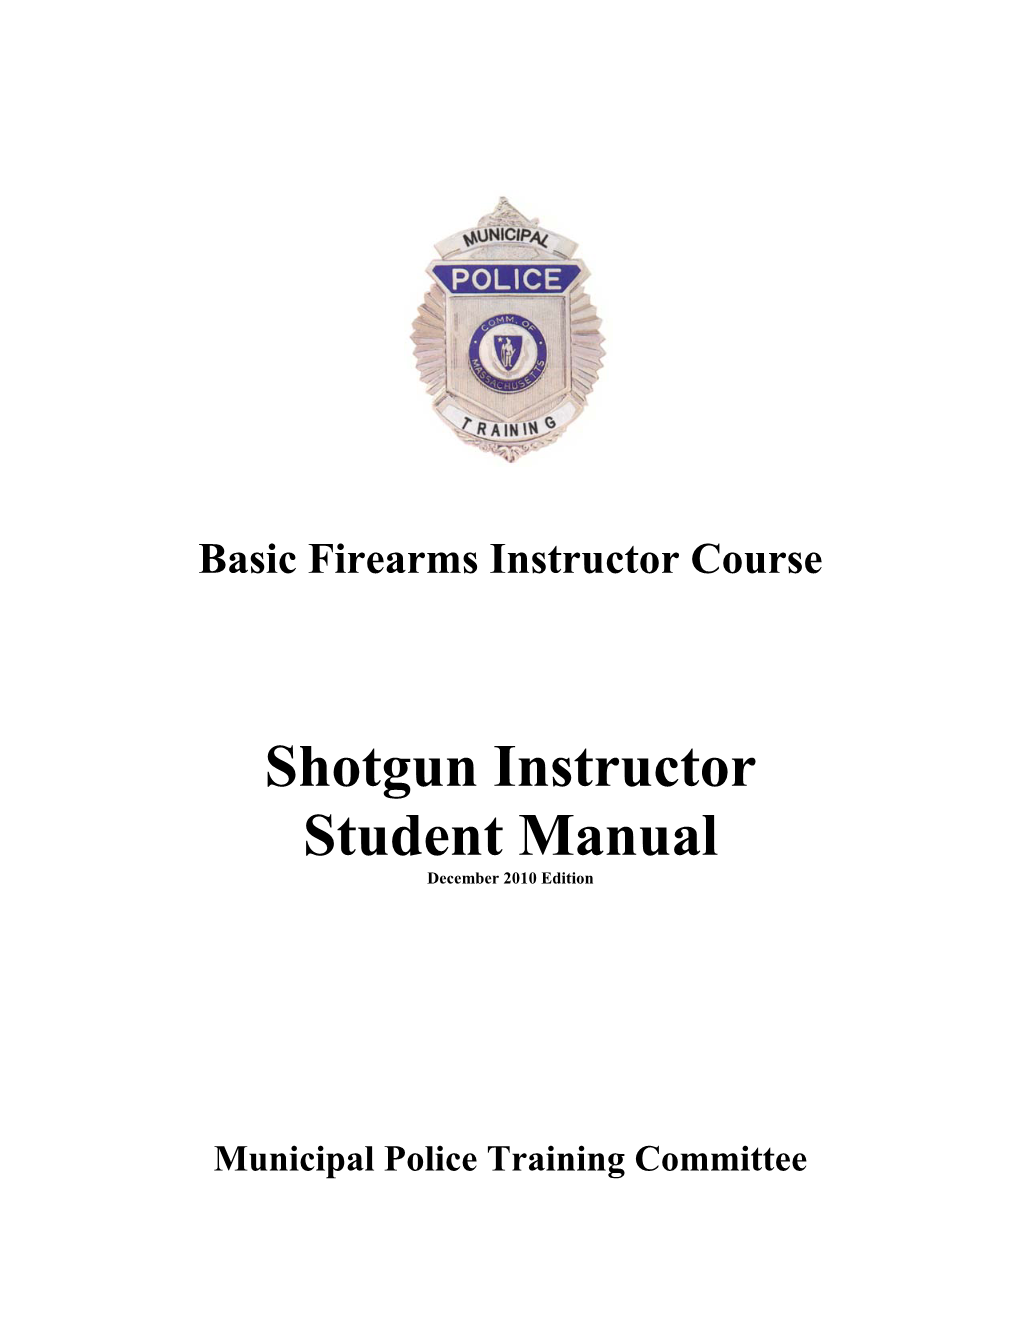 Shotgun Instructor Student Manual December 2010 Edition